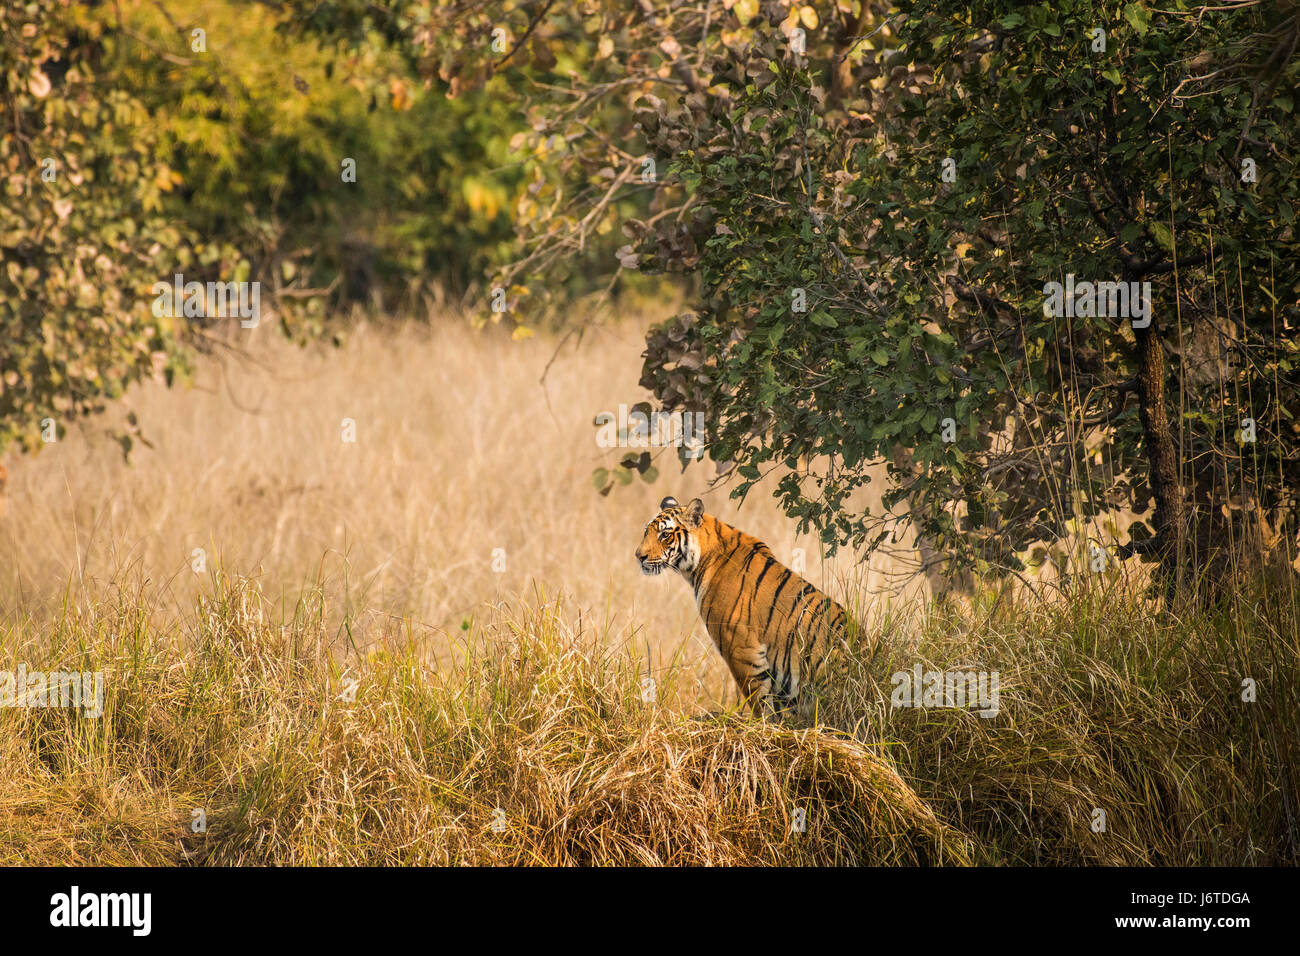 Tigers of Bandhavgarh India Stock Photo